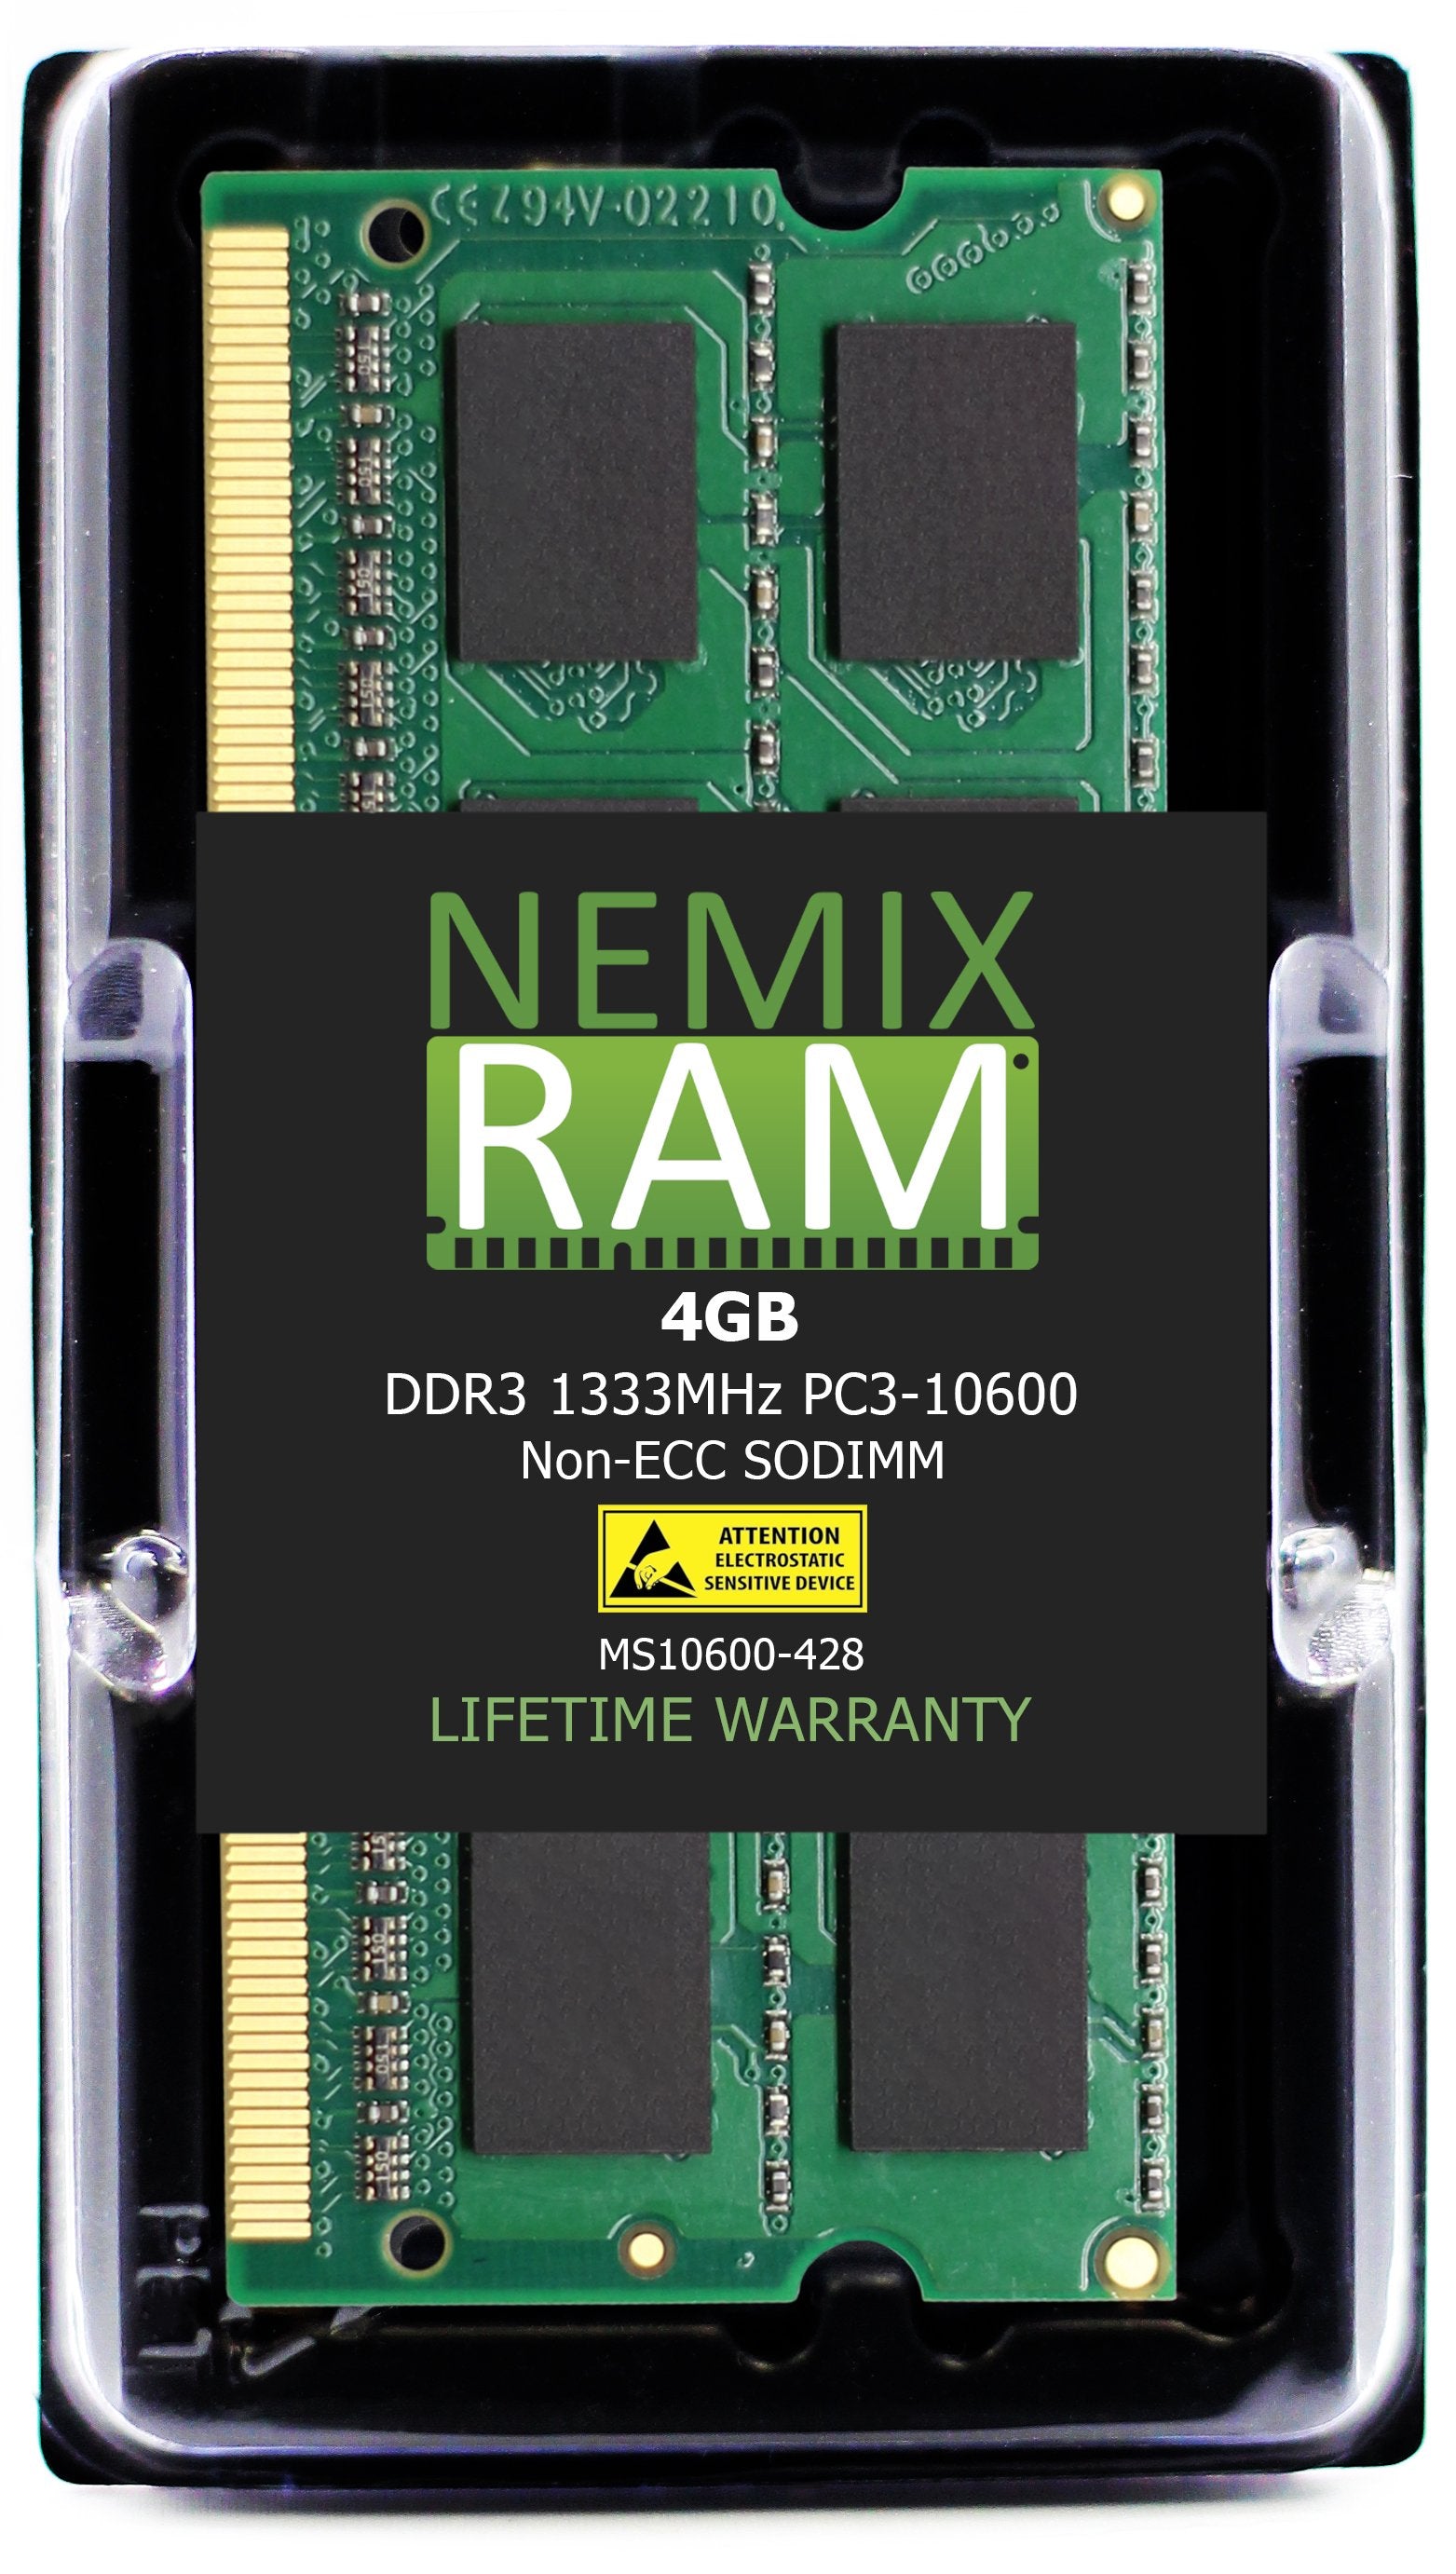 DDR3 1333MHZ PC3-10600 SODIMM for Apple iMac 2010 27" & 21.5" (11,3 11,2)